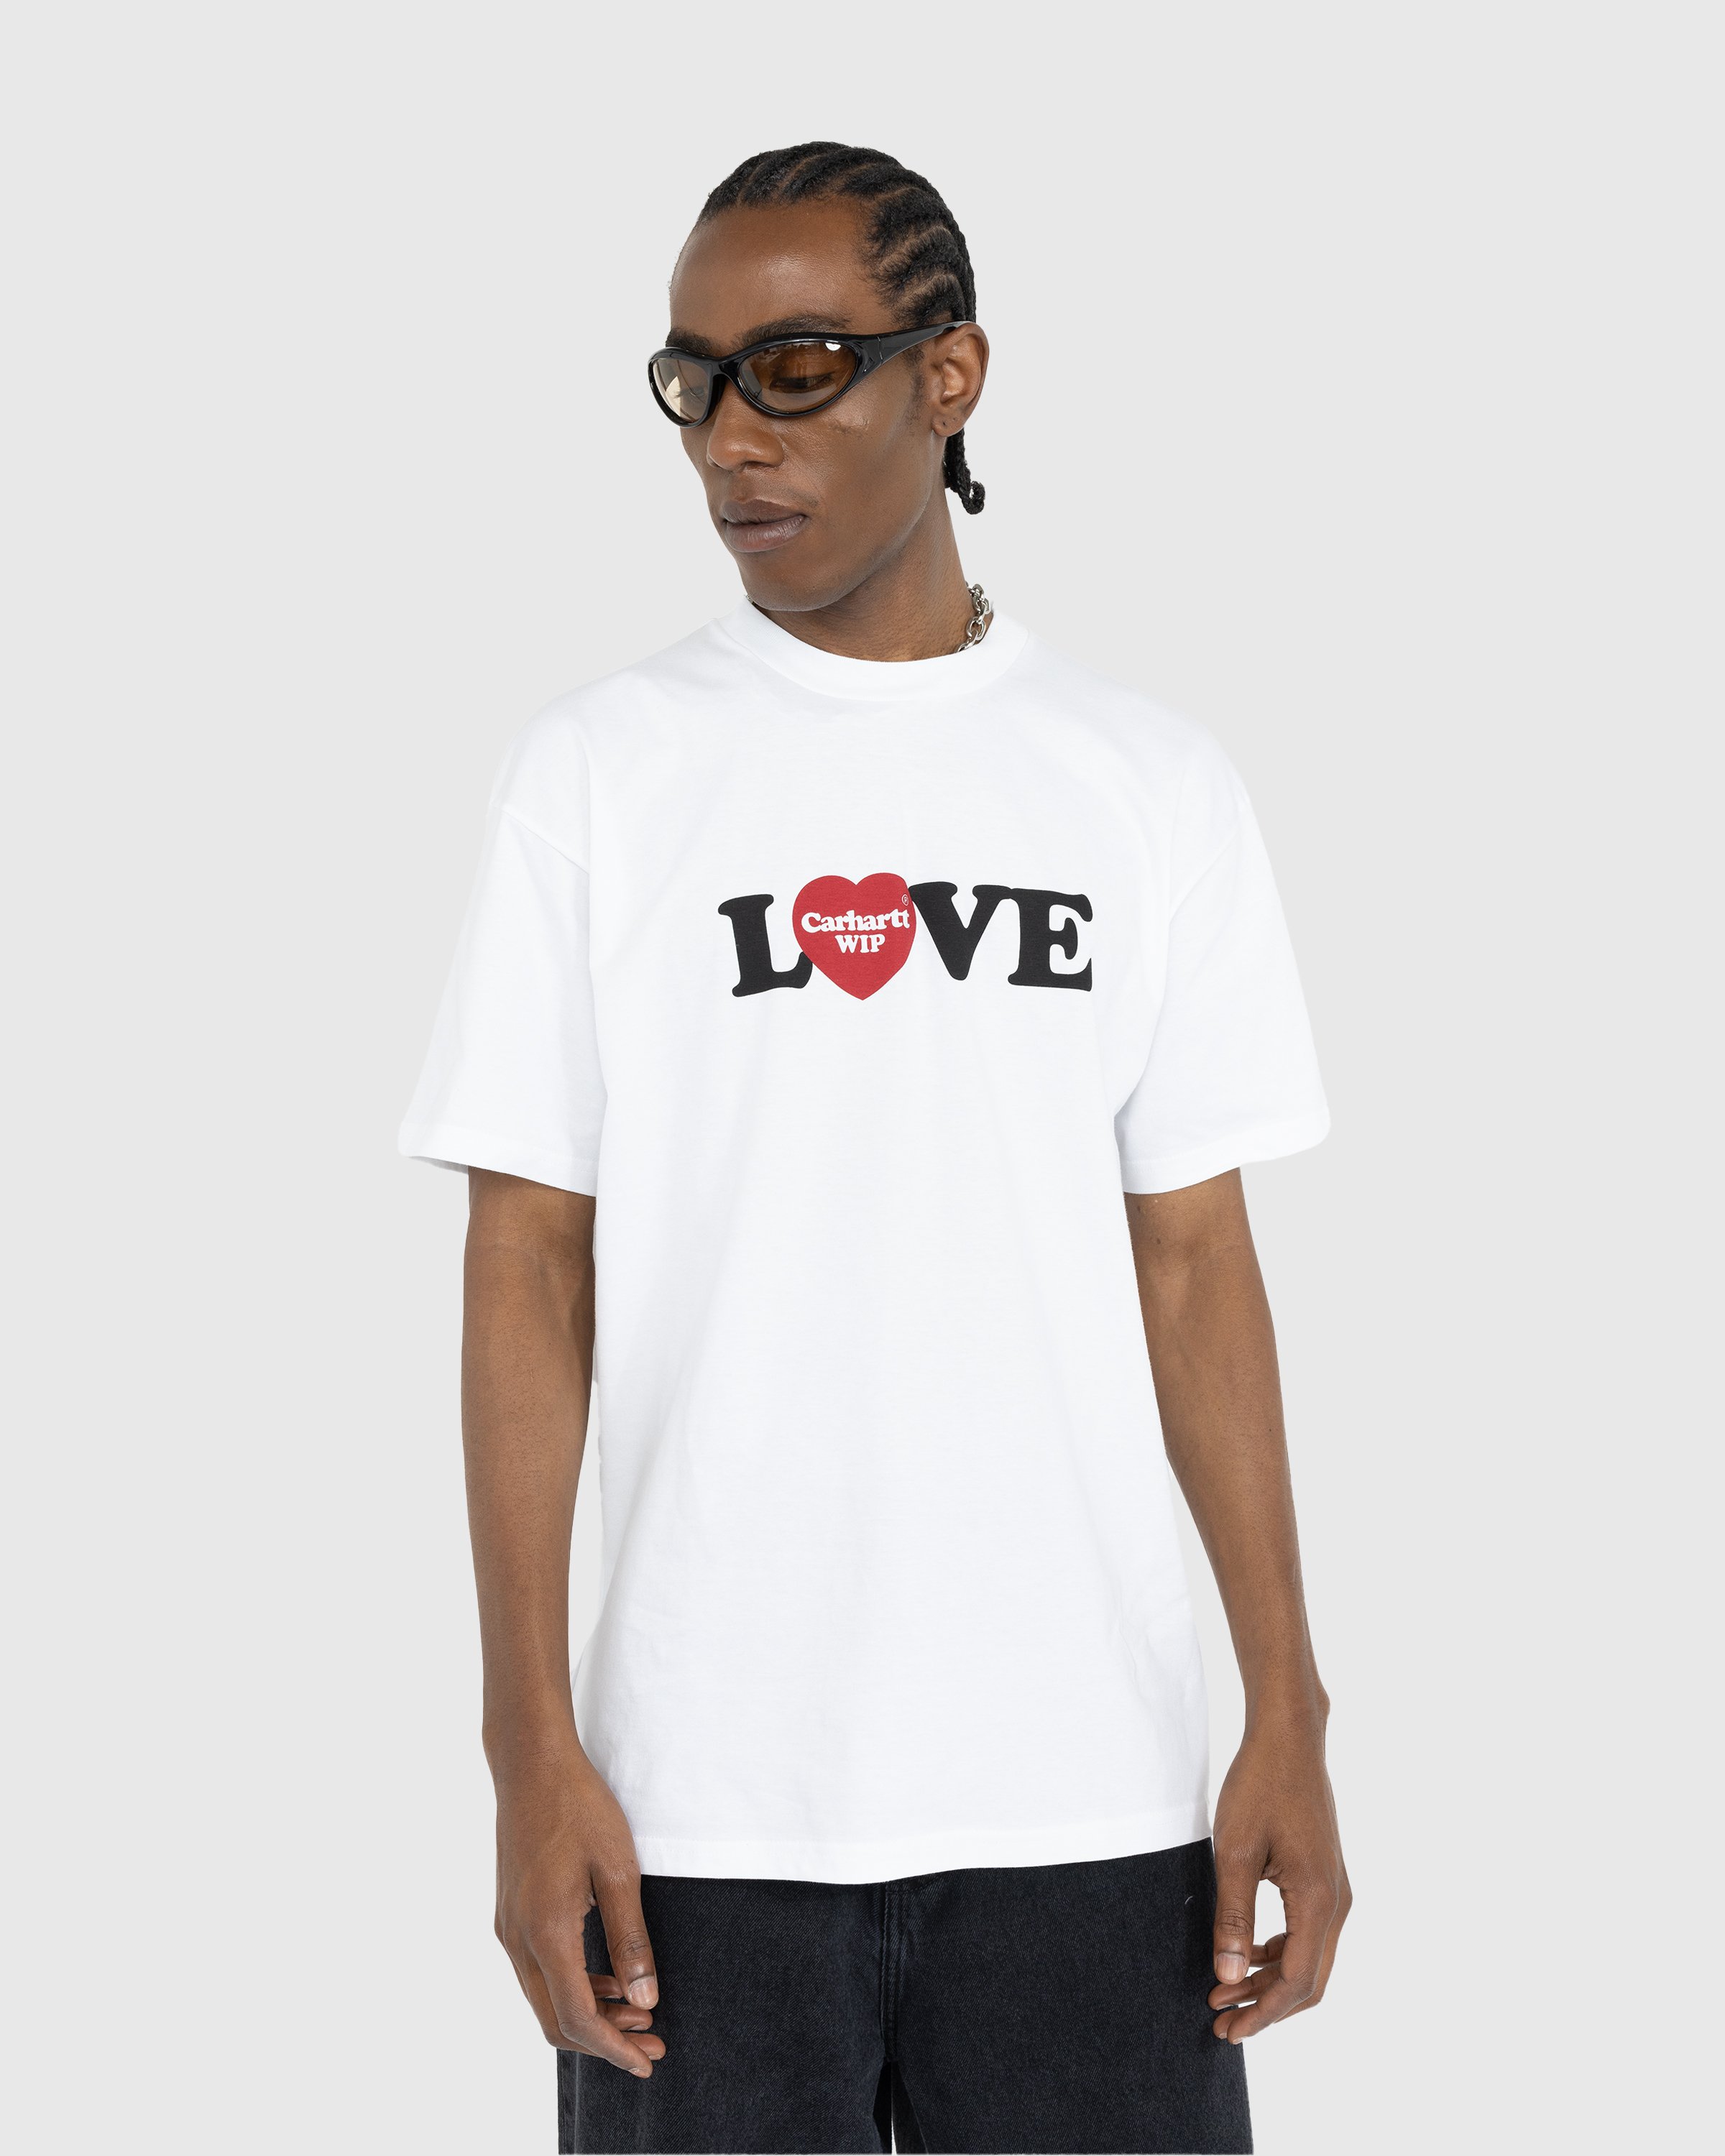 Carhartt WIP – S/S Love T-Shirt White | Highsnobiety Shop